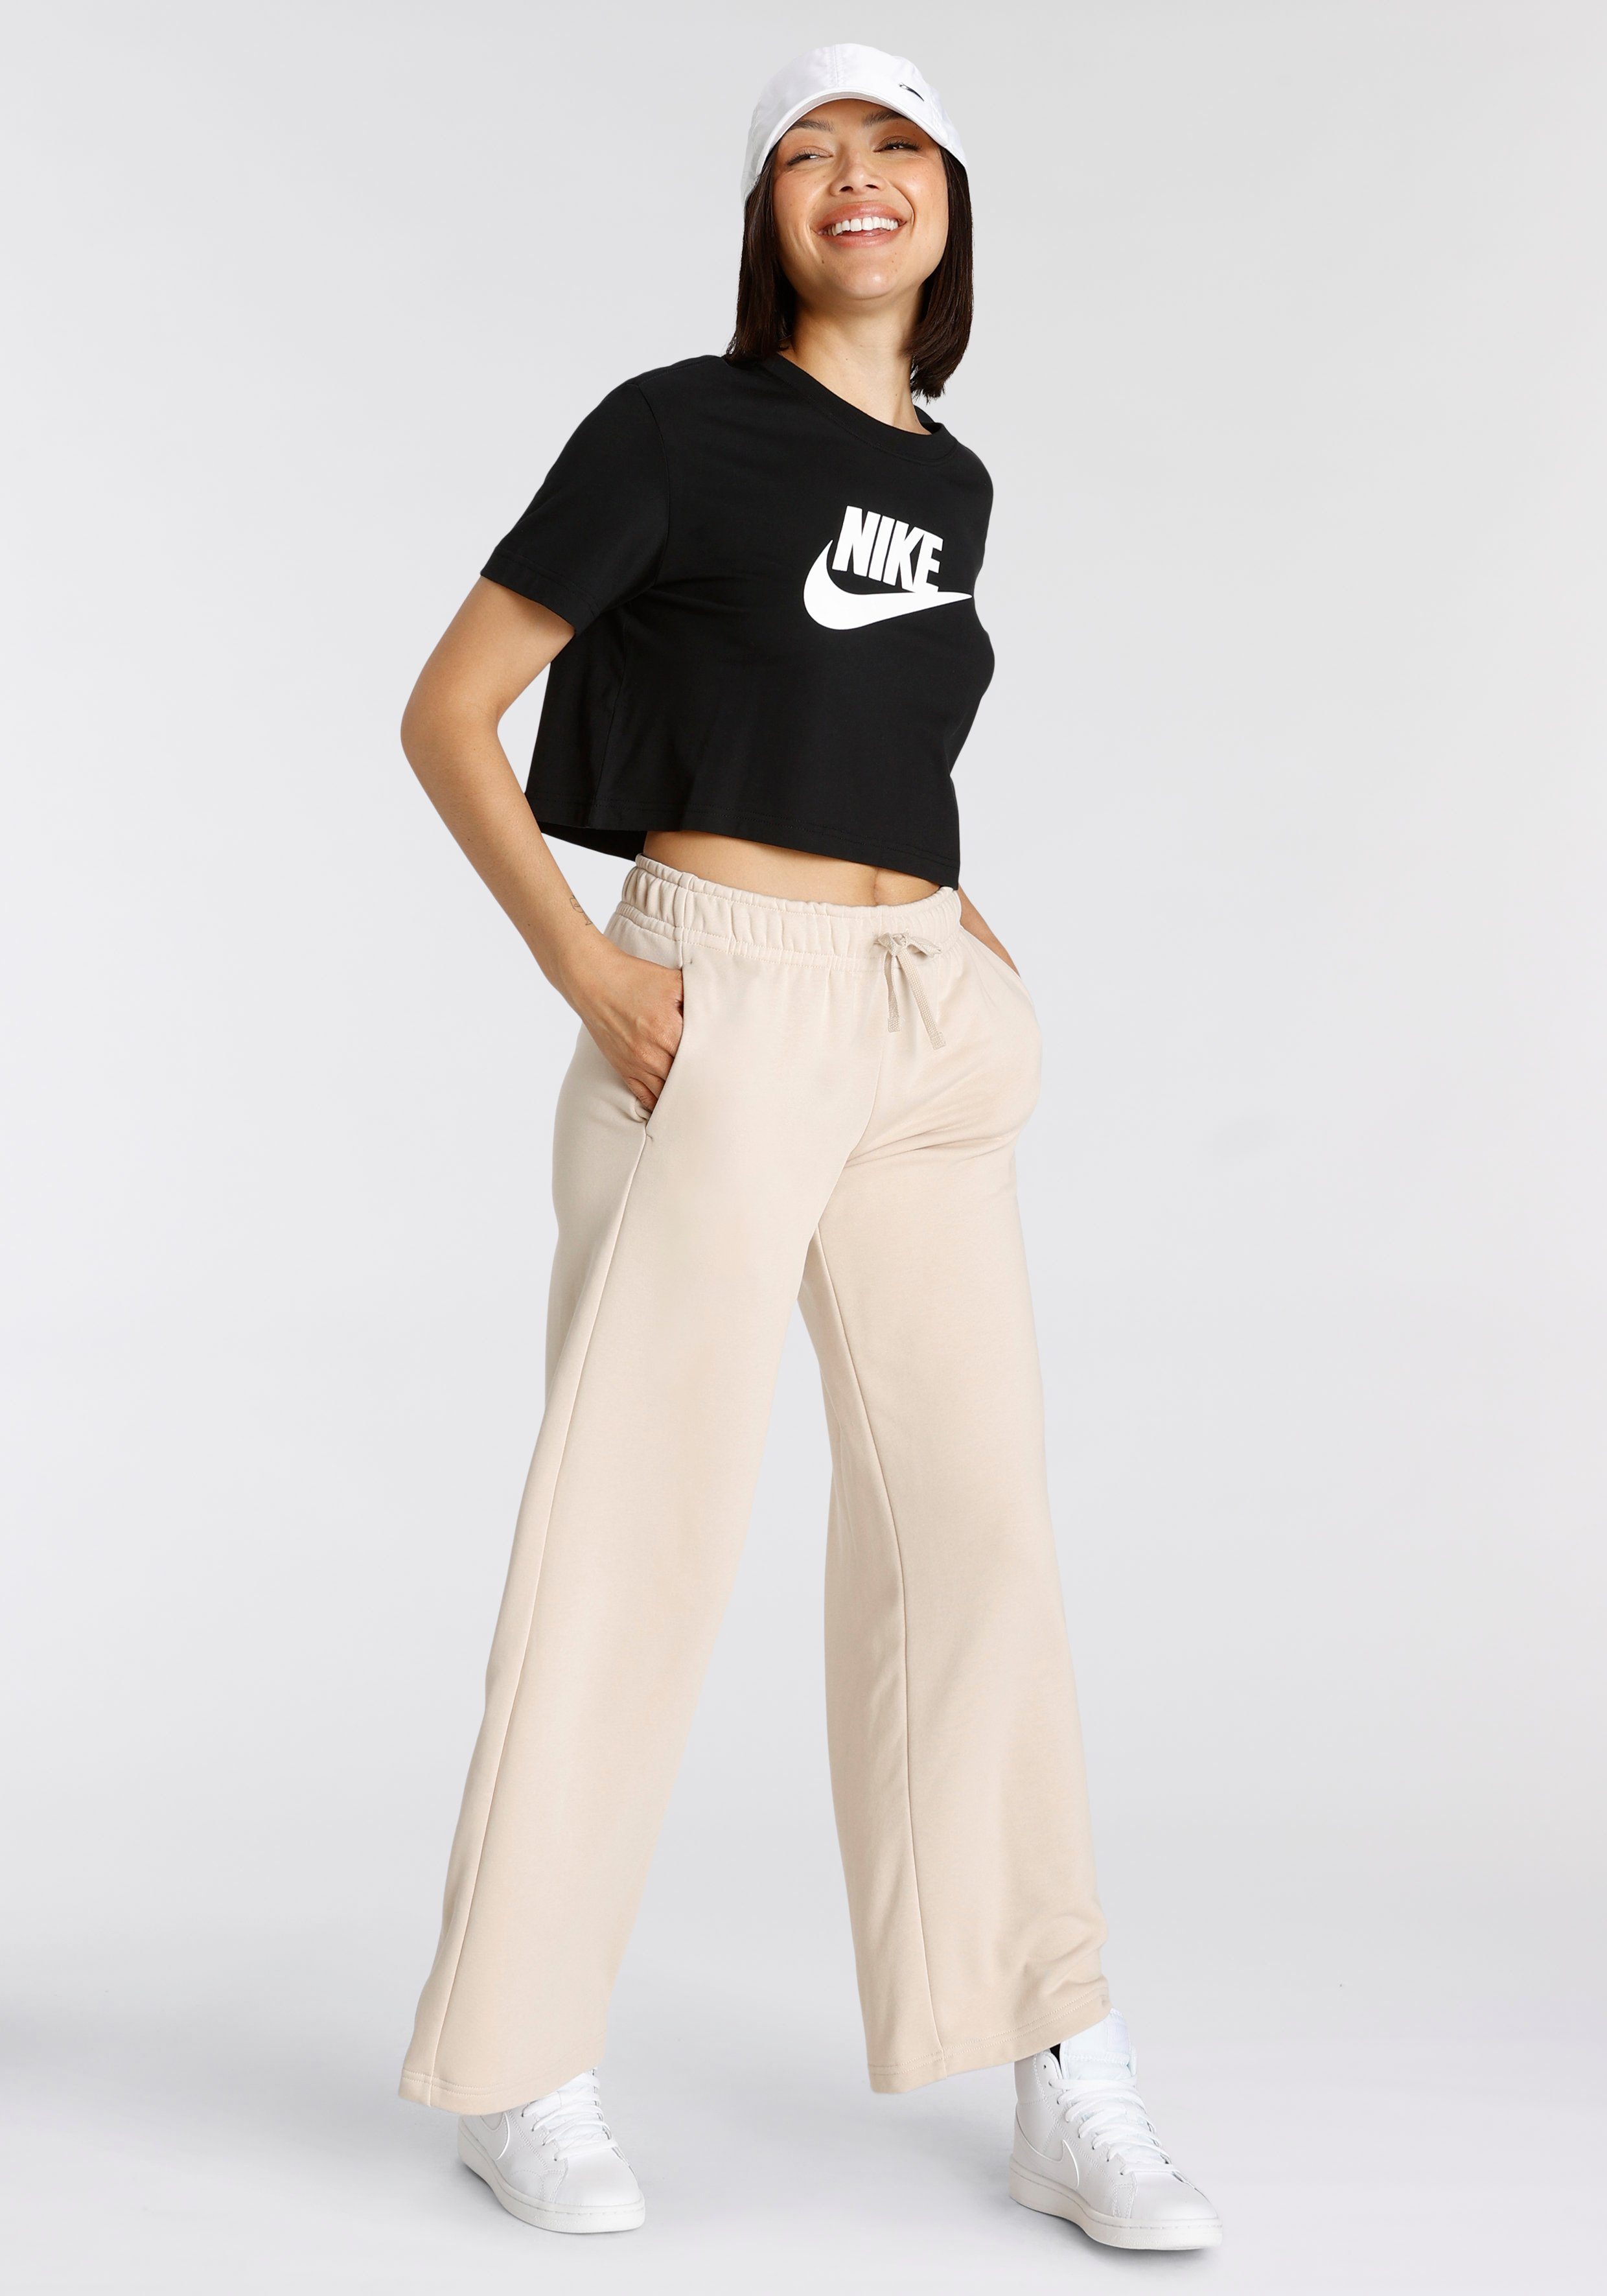 Sportswear LOGO Nike schwarzweiss T-SHIRT T-Shirt CROPPED WOMEN'S ESSENTIAL